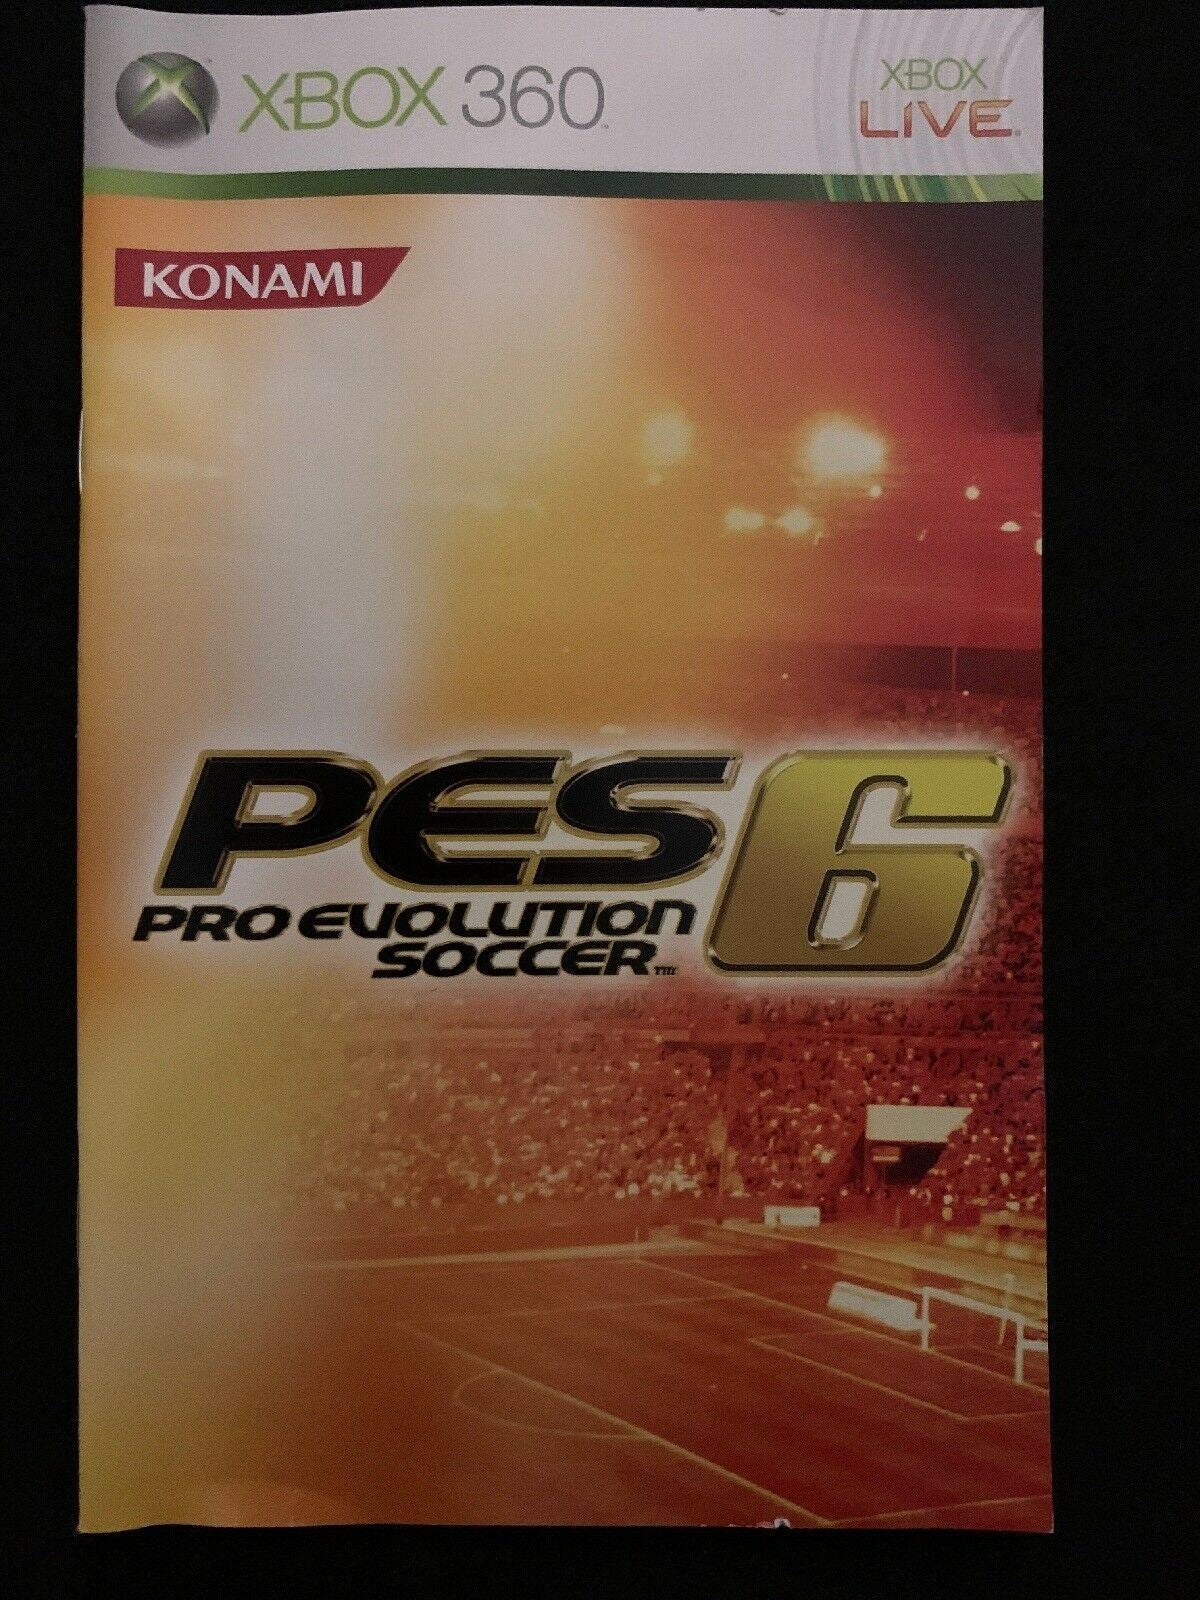 Pro Evolution Soccer 6 - Microsoft Xbox 360 Konami Soccer Football Game